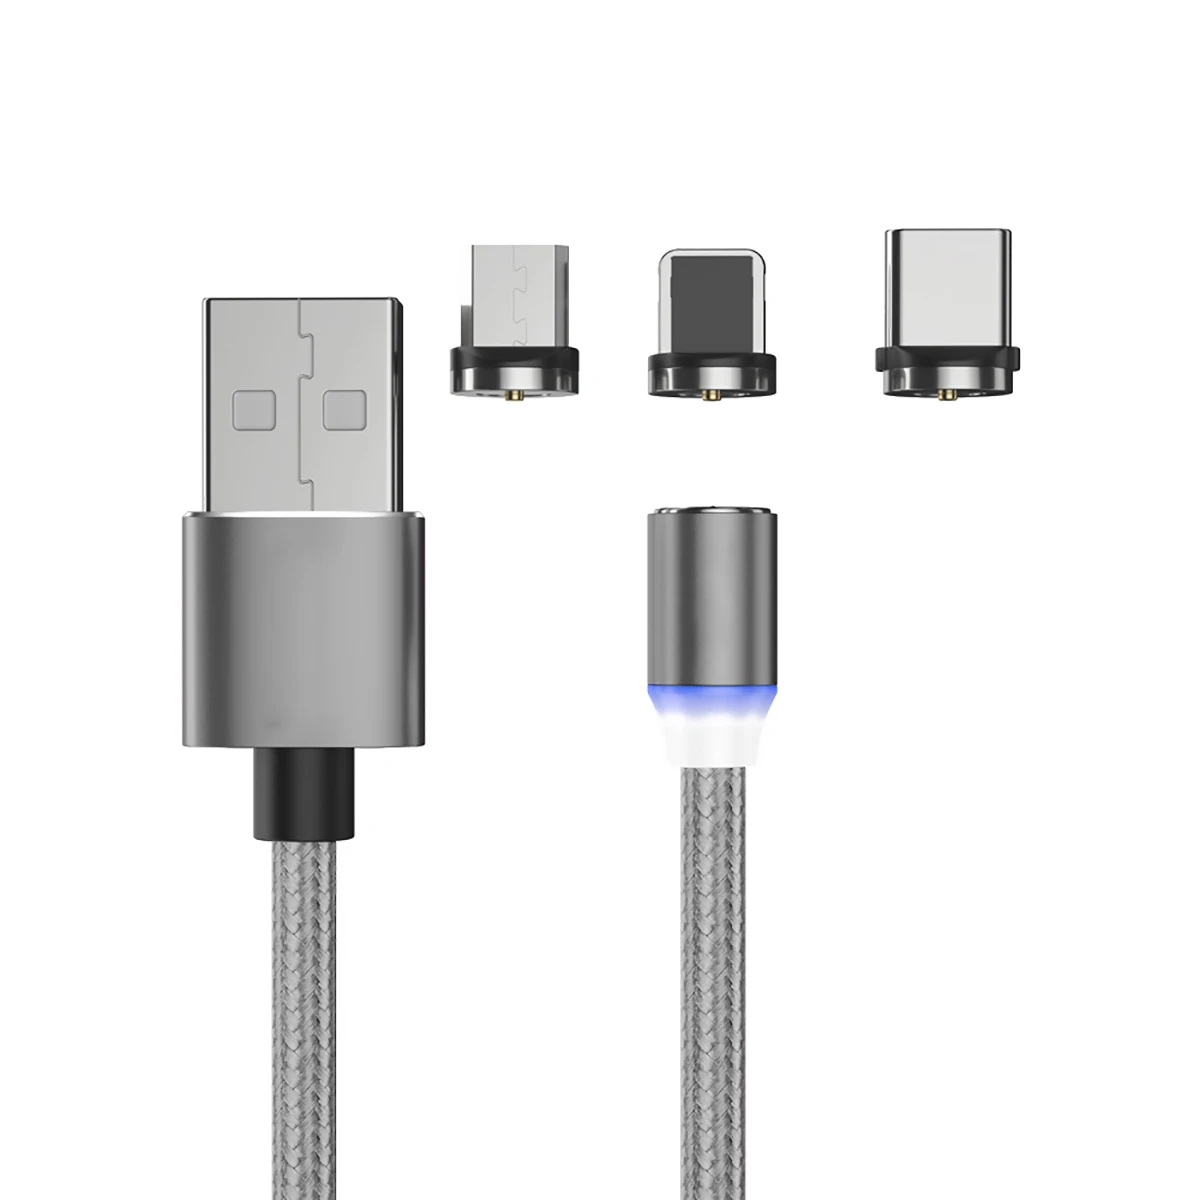 VANLEAD Магнитный USB кабель type-C Iphone зарядное устройство Micro Usb кабель для Iphone Xr Oneplus 6t samsung S9 Xiaomi Redmi Note 8 Pro - Цвет: Grey 3 plug